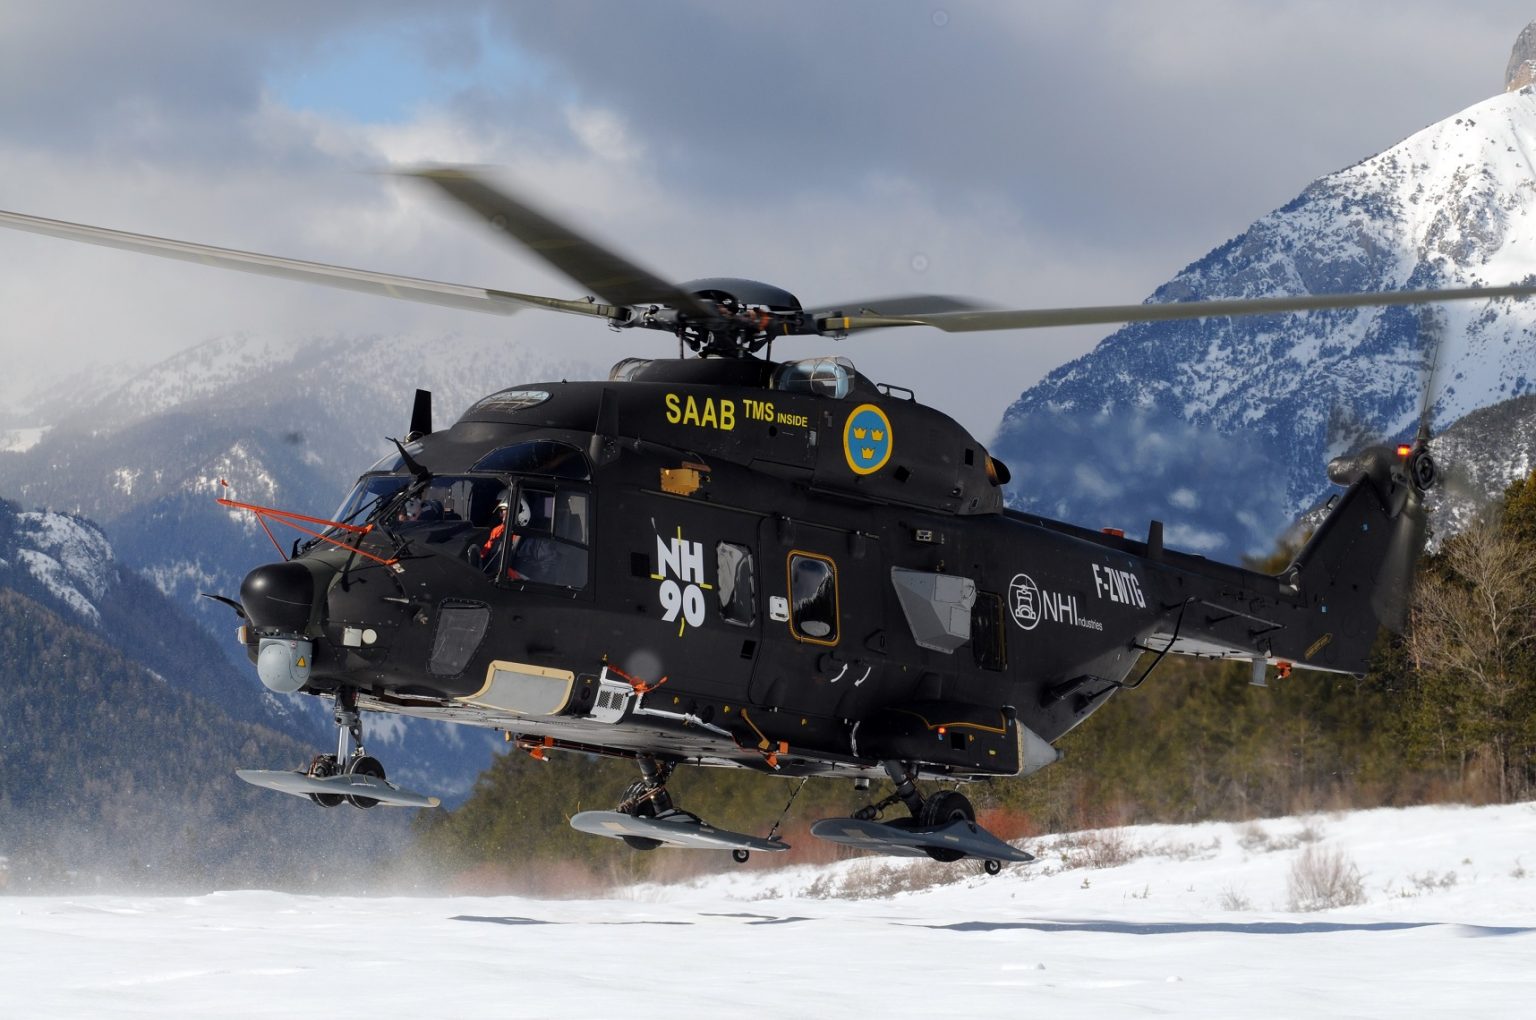 NH90 Ski set